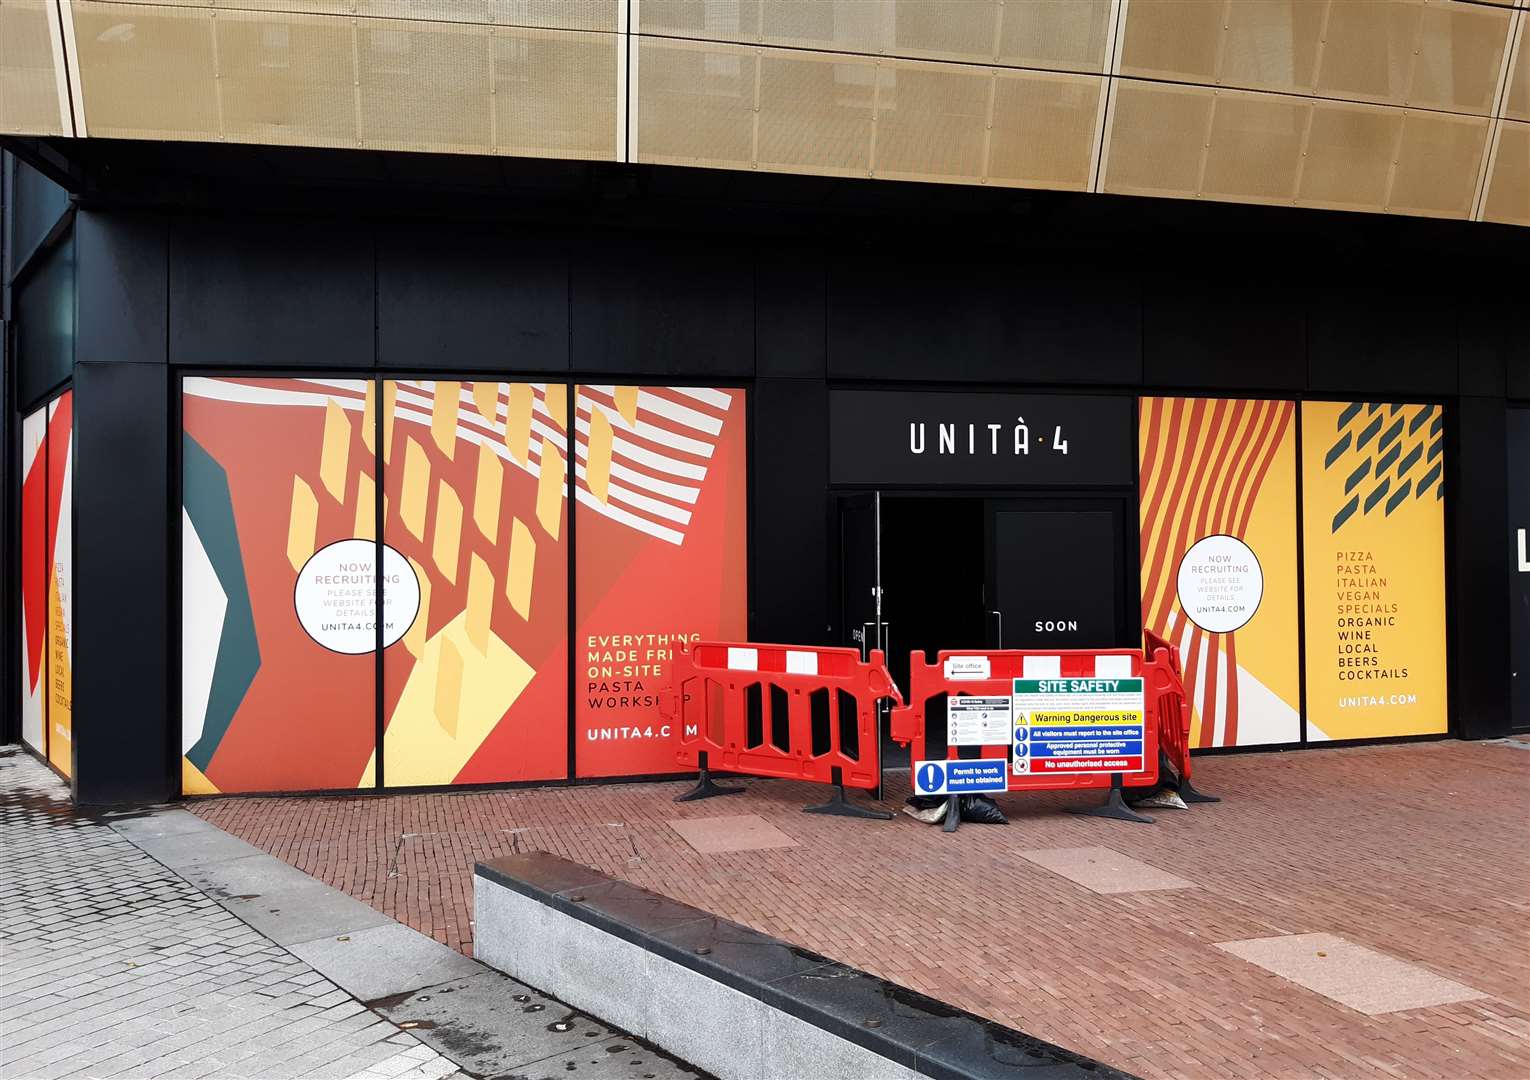 Unita 4 will be a family-friendly restaurant, bosses say